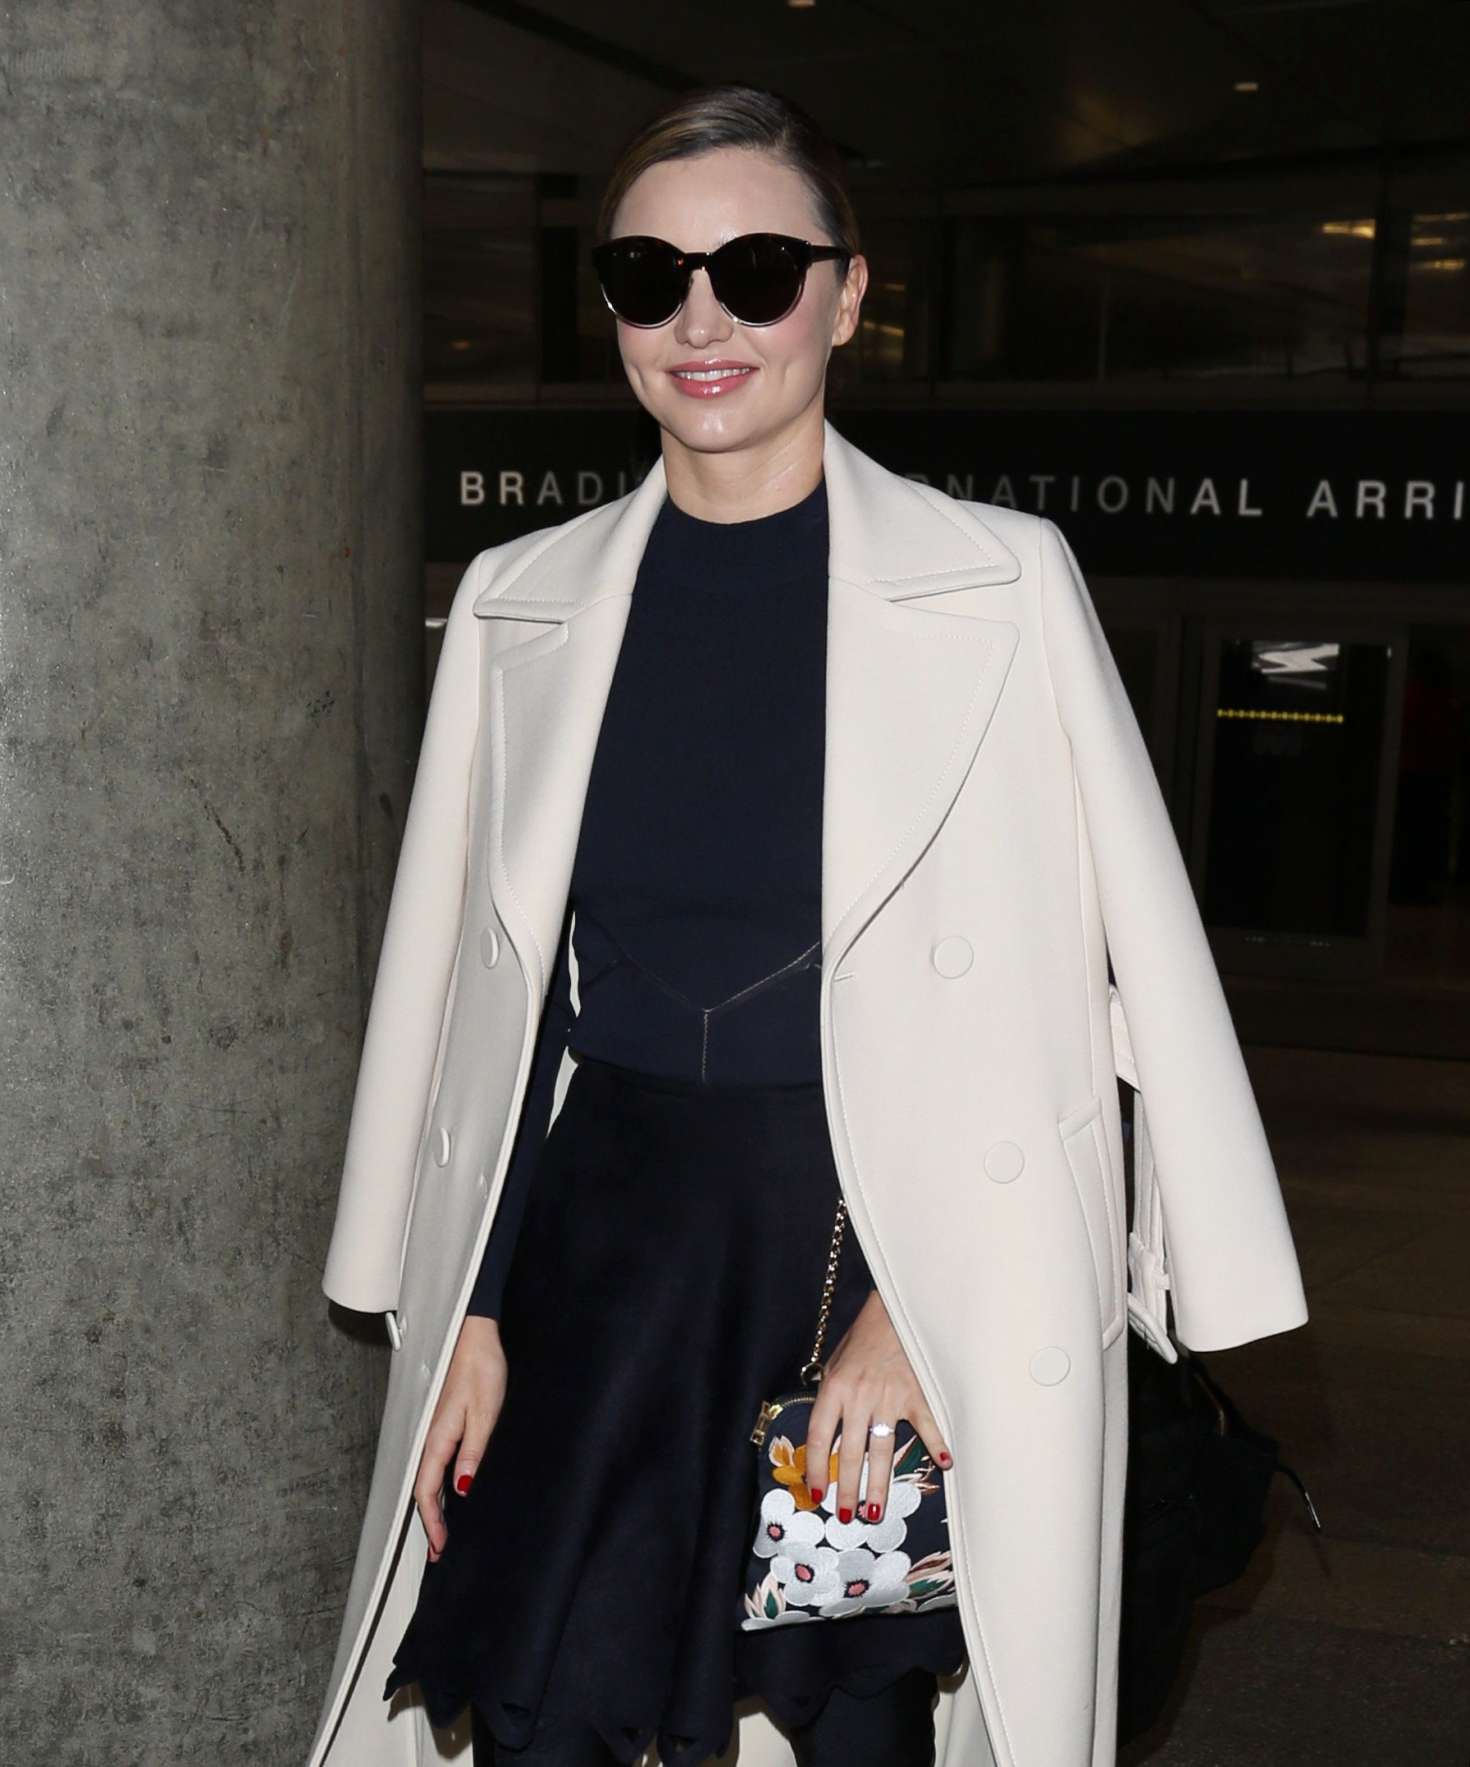 Miranda Kerr Arrives at LAX Airport in Los Angeles